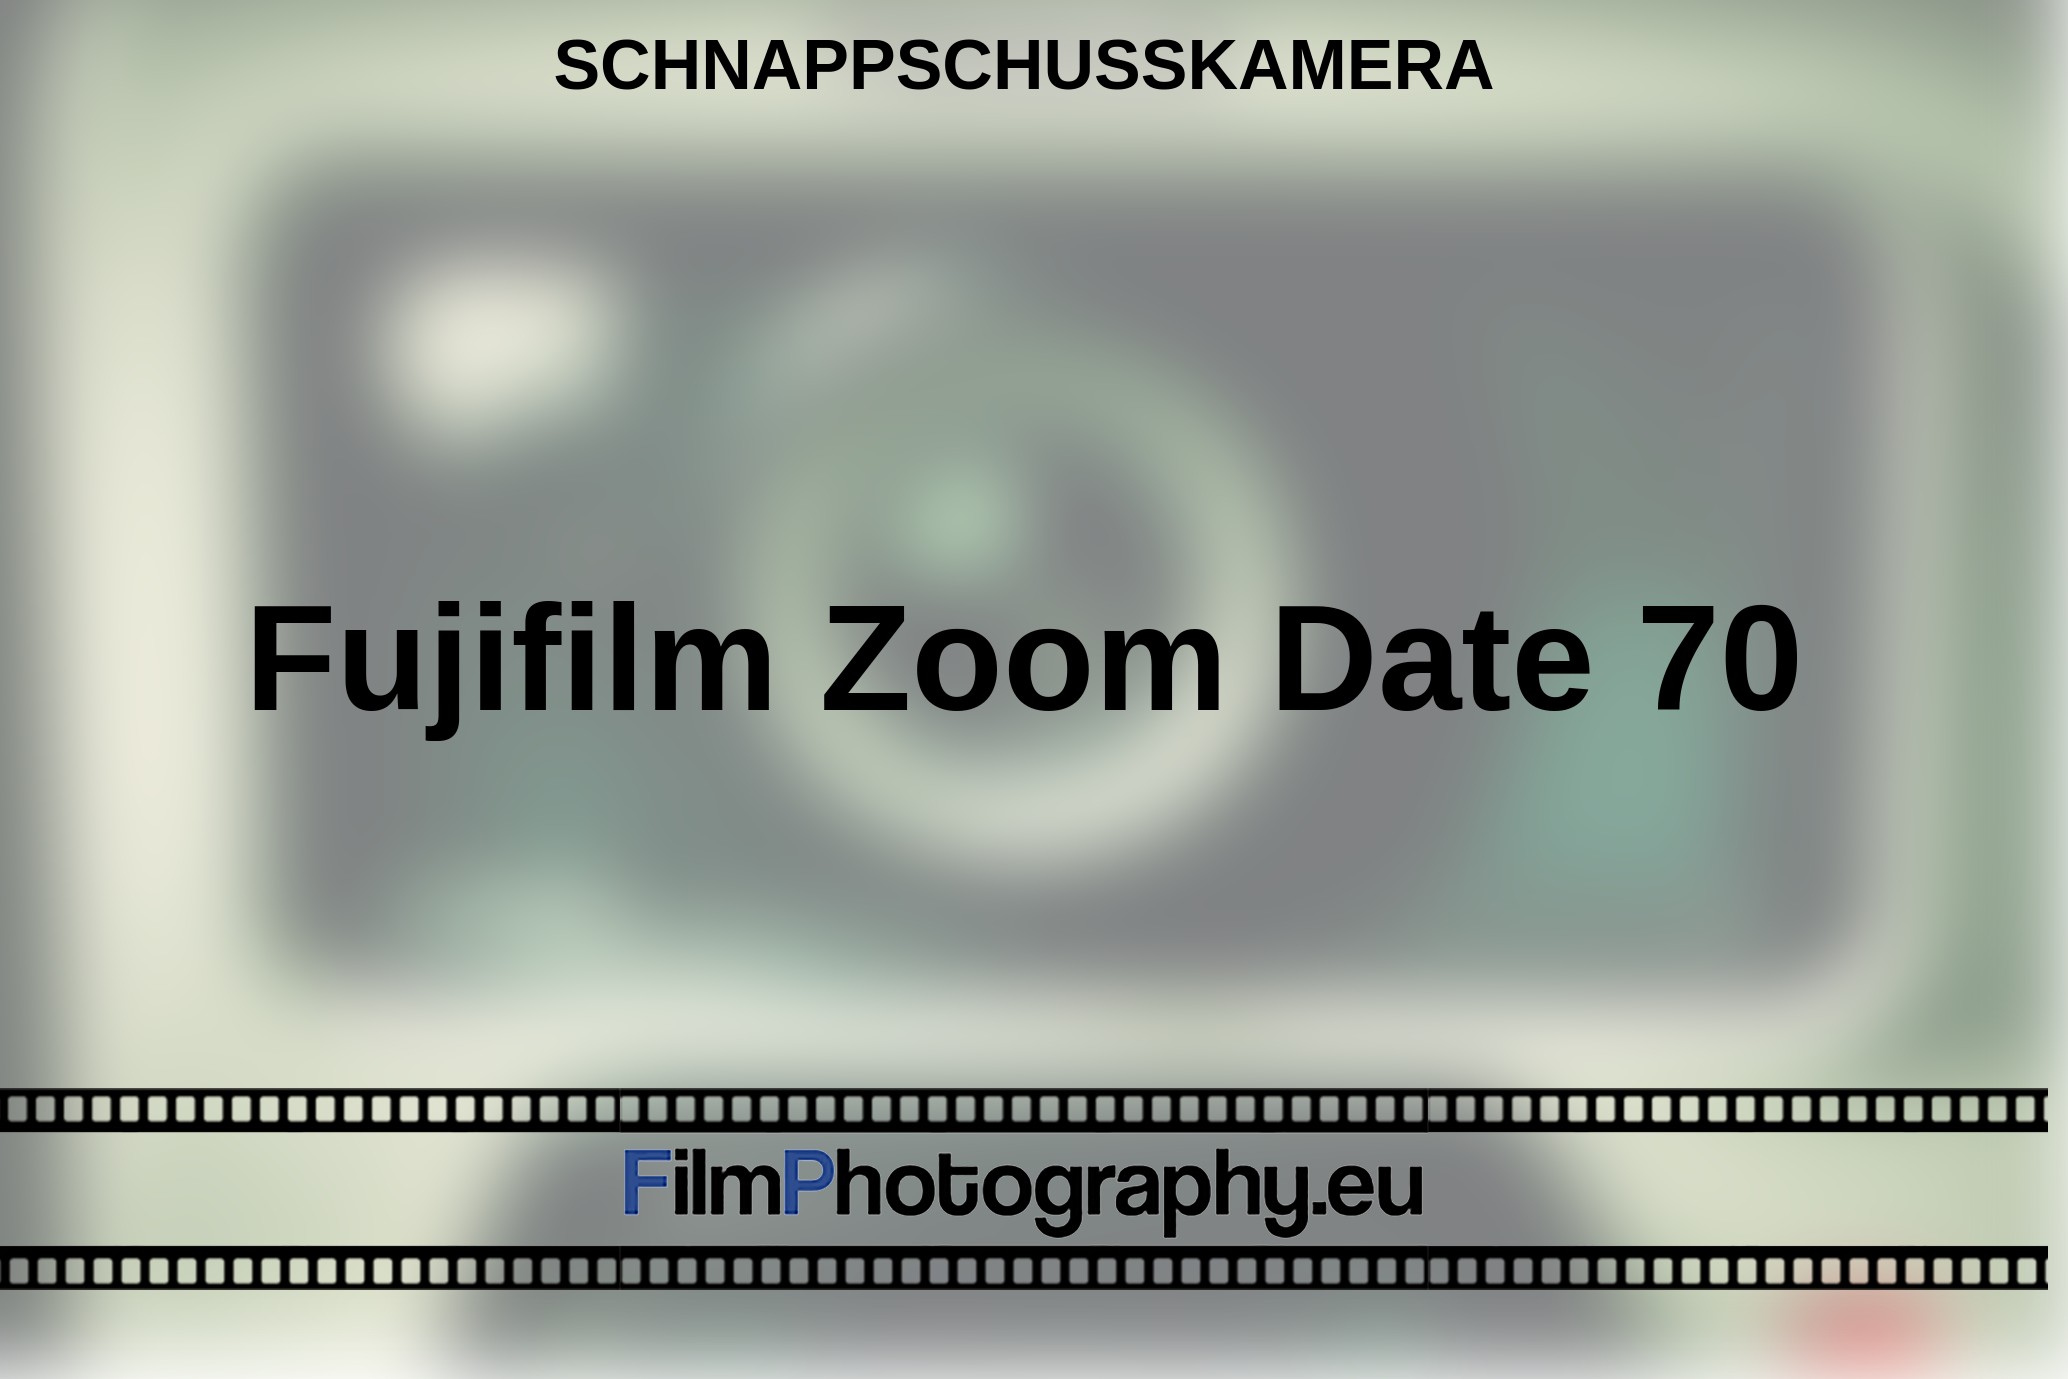 Fujifilm-Zoom-Date-70-Schnappschusskamera-bnv.jpg